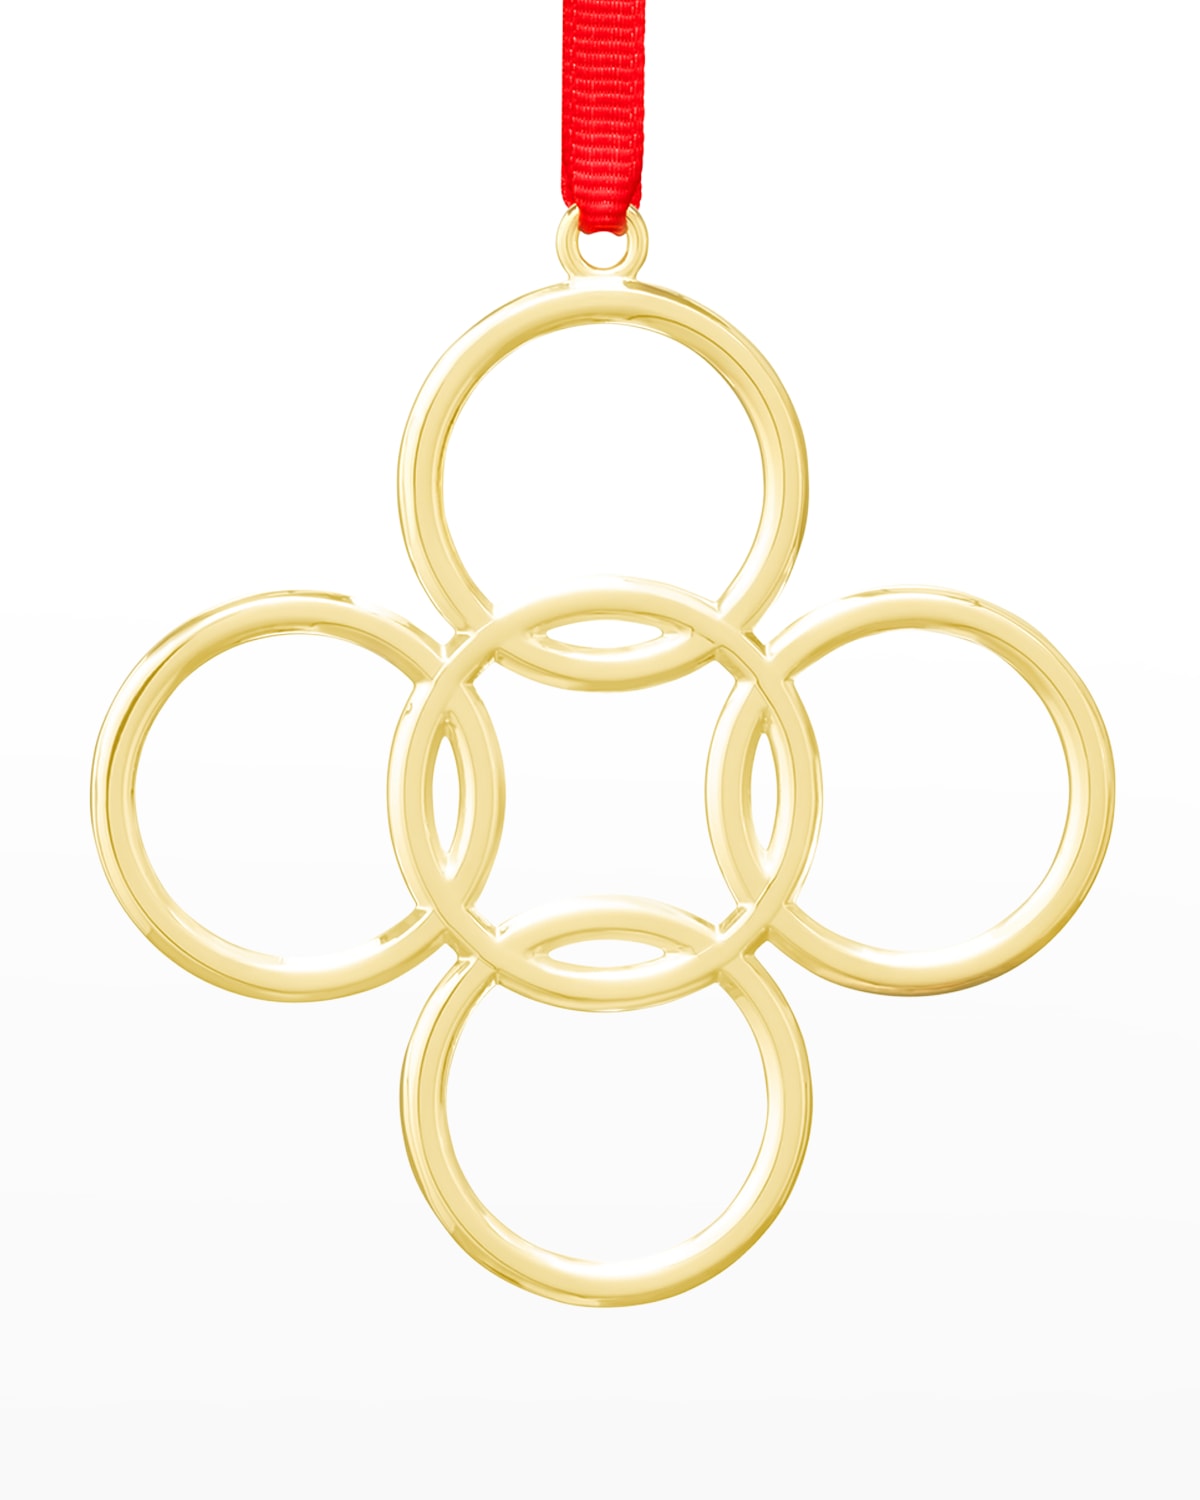 Five Golden Rings Ornament